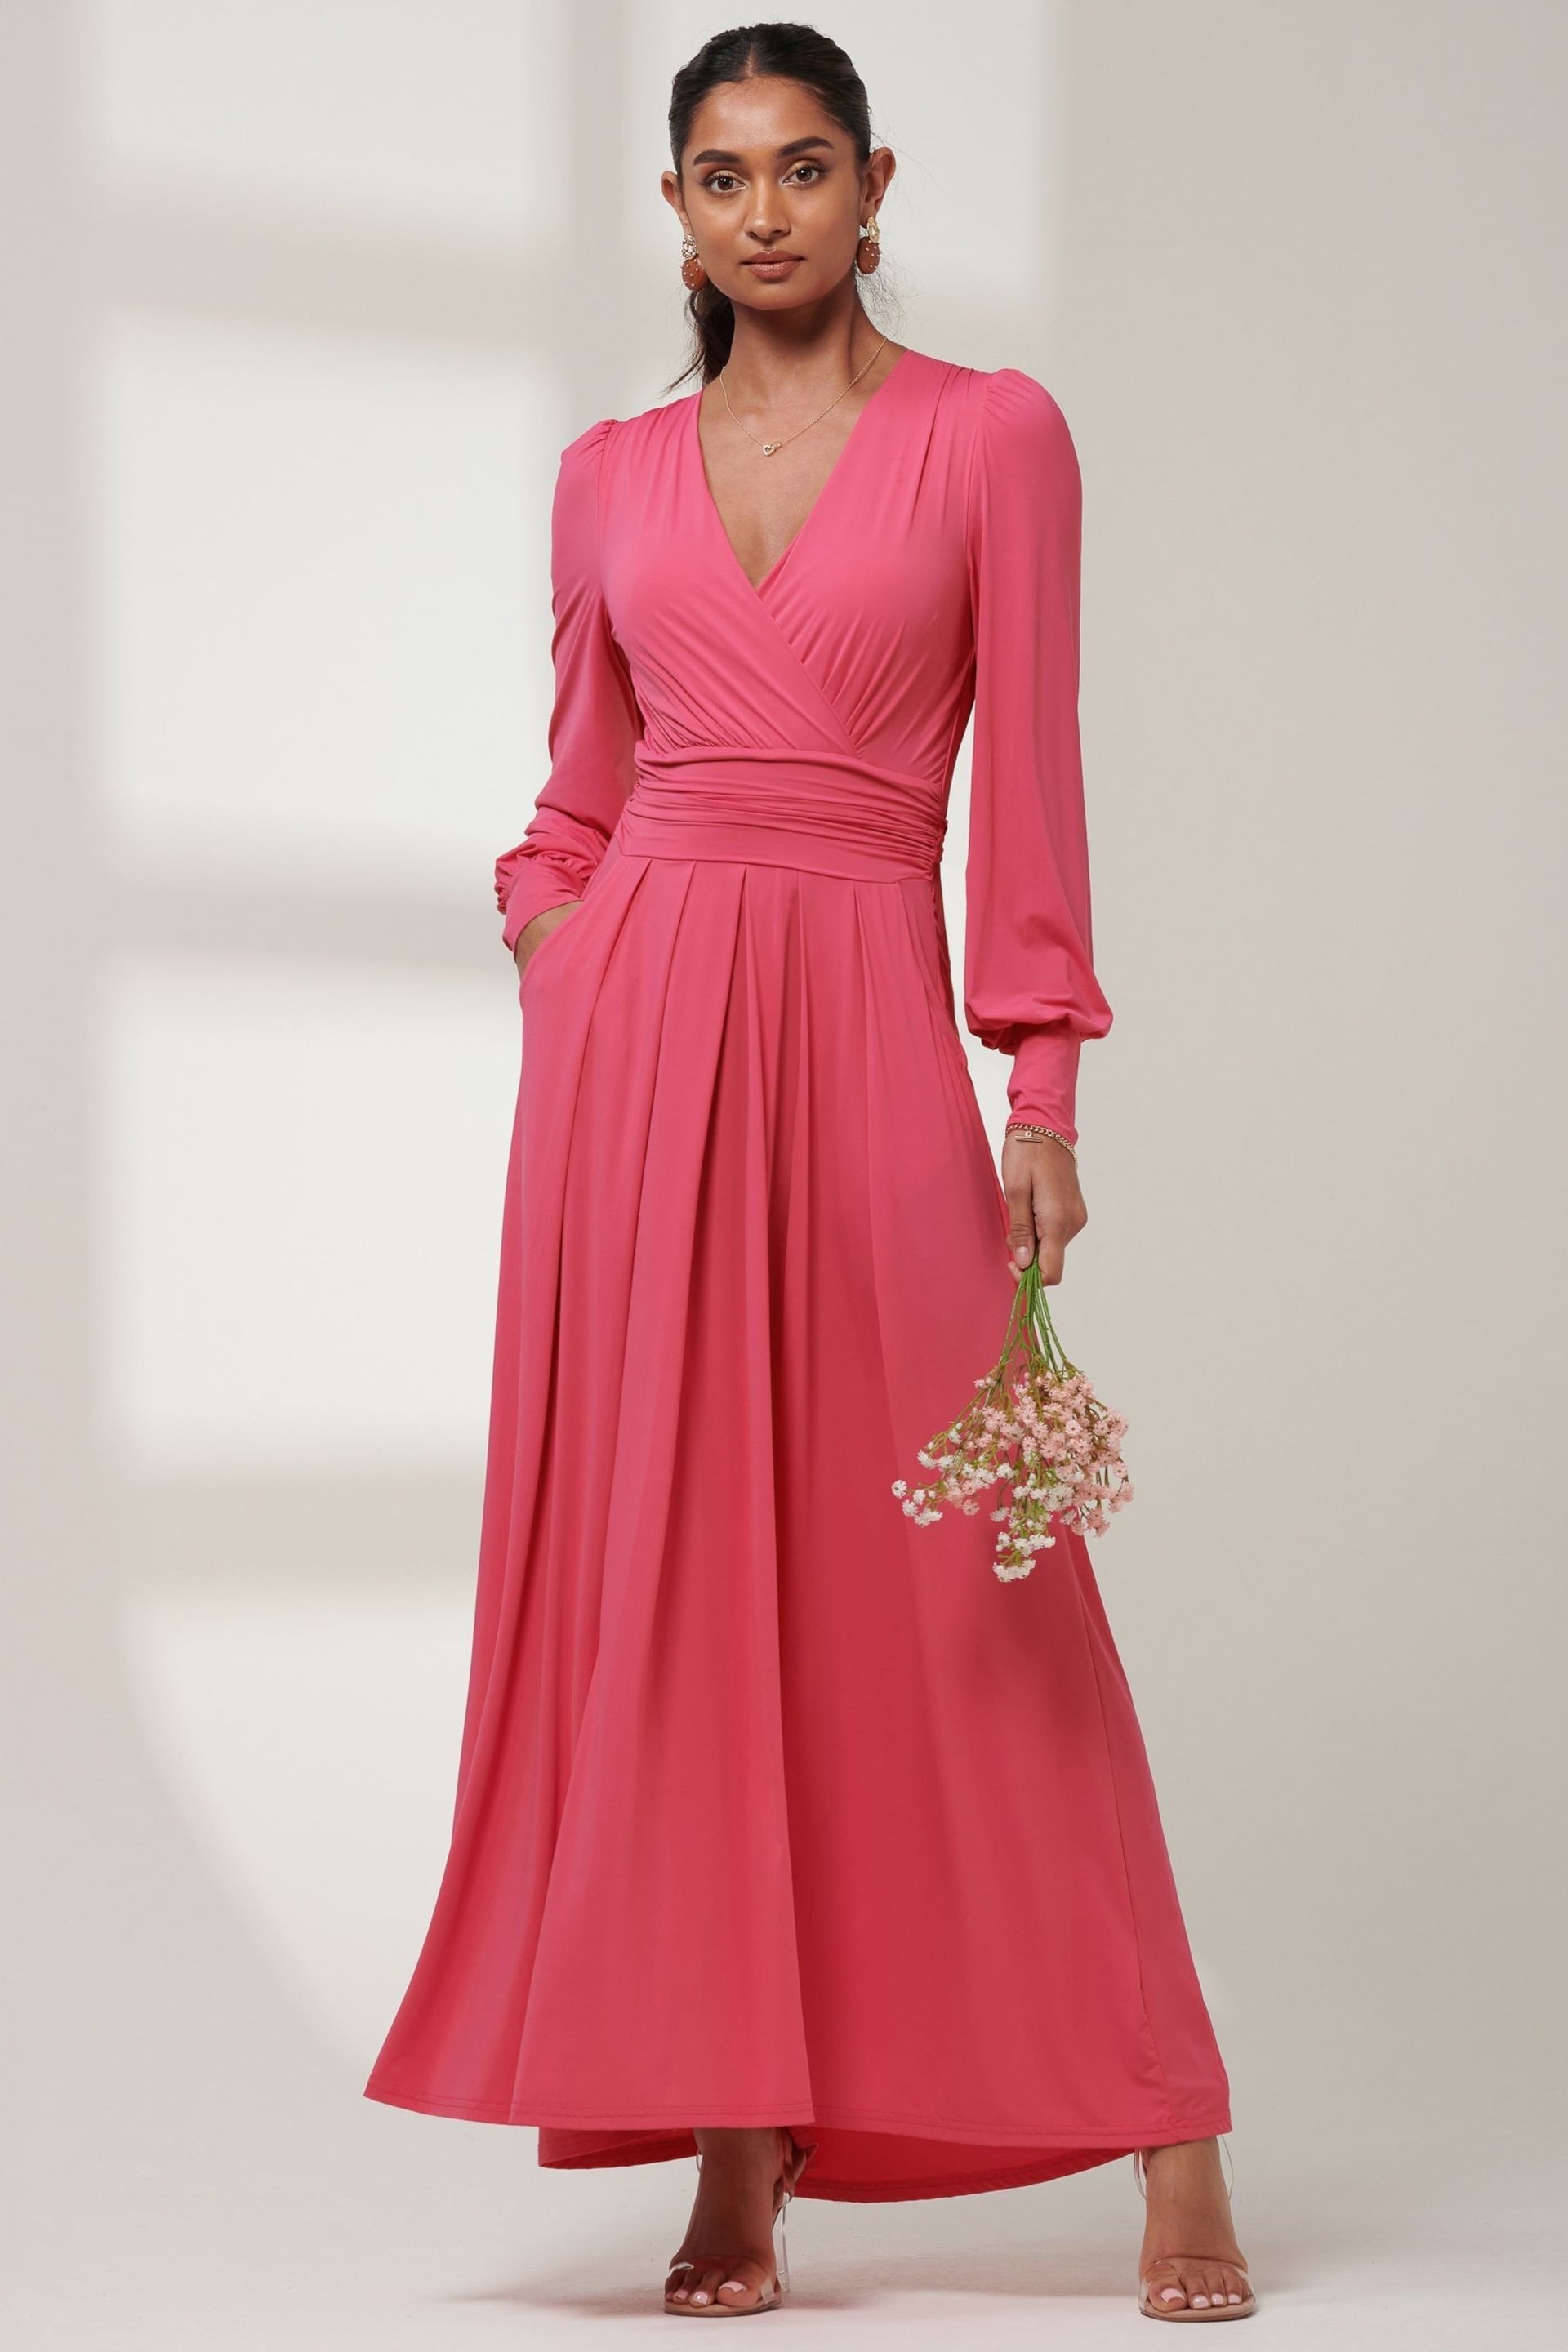 Jolie Moi Pink Giulia Long Sleeve Maxi Dress - Image 6 of 6